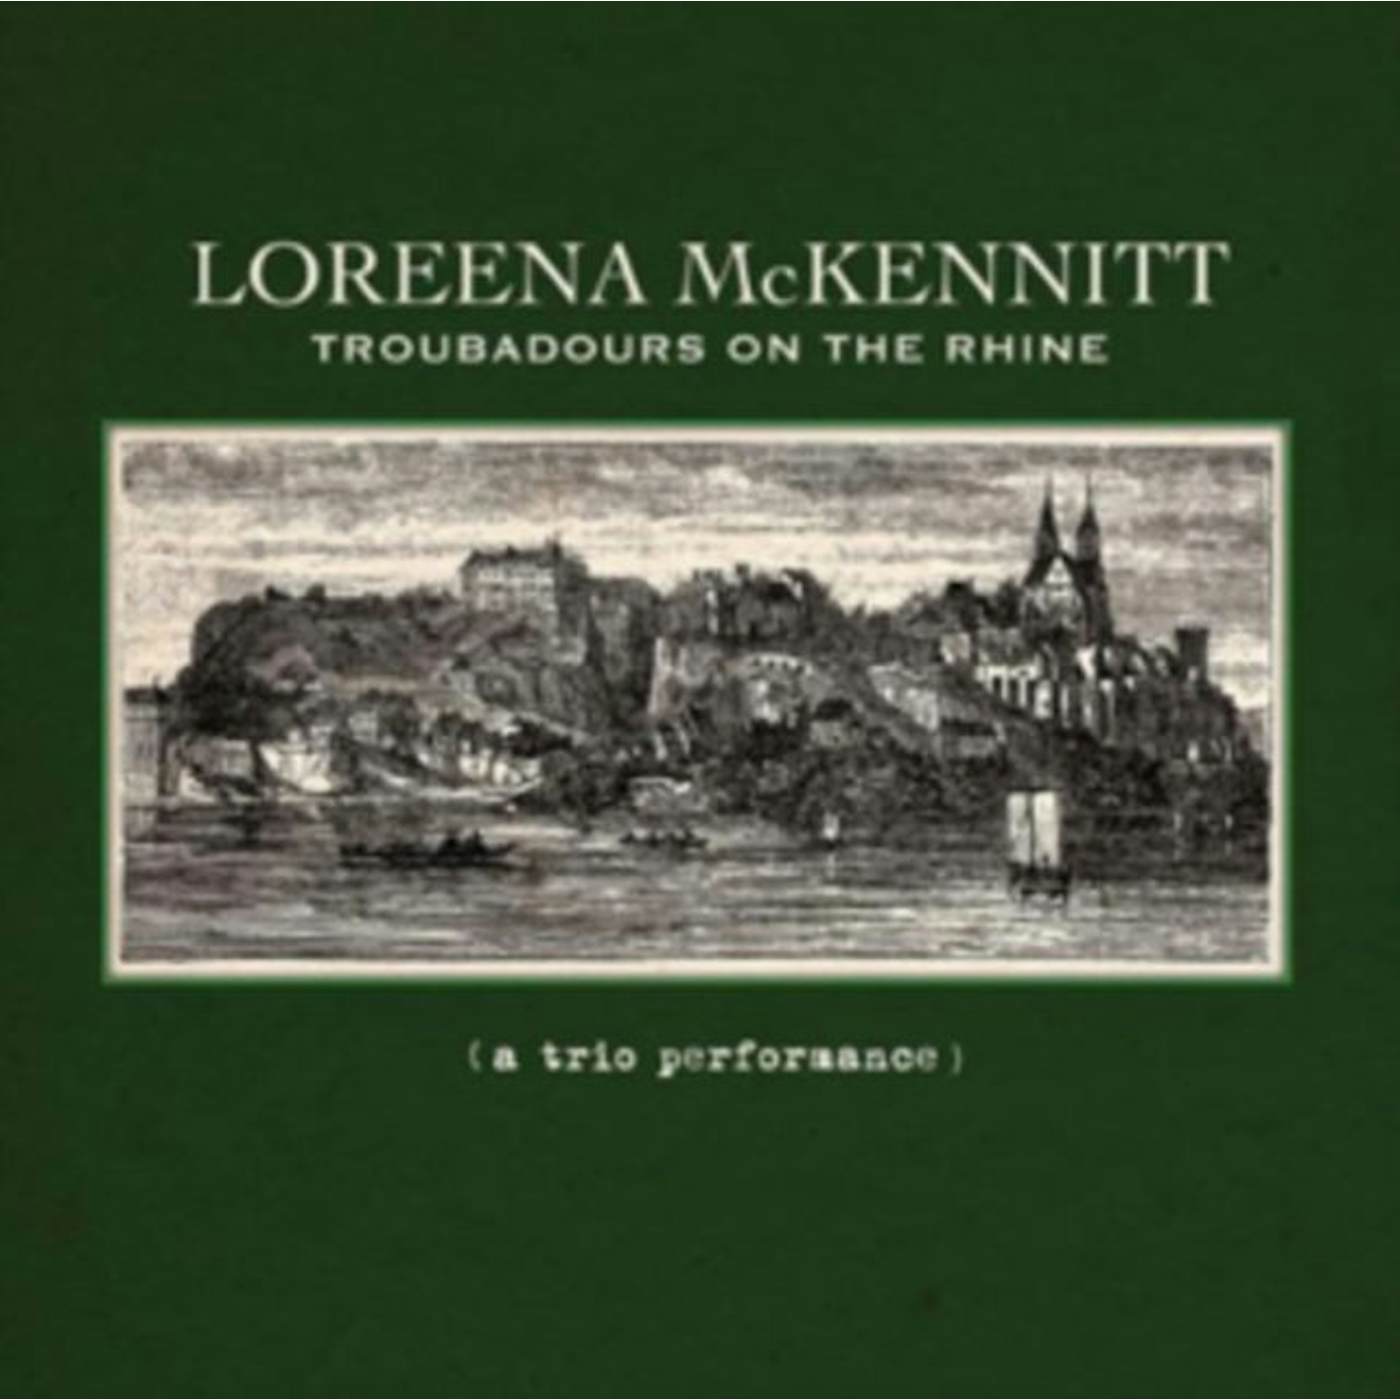 Loreena Mckennitt CD - Troubadours On The Rhine (A Trio Performance)